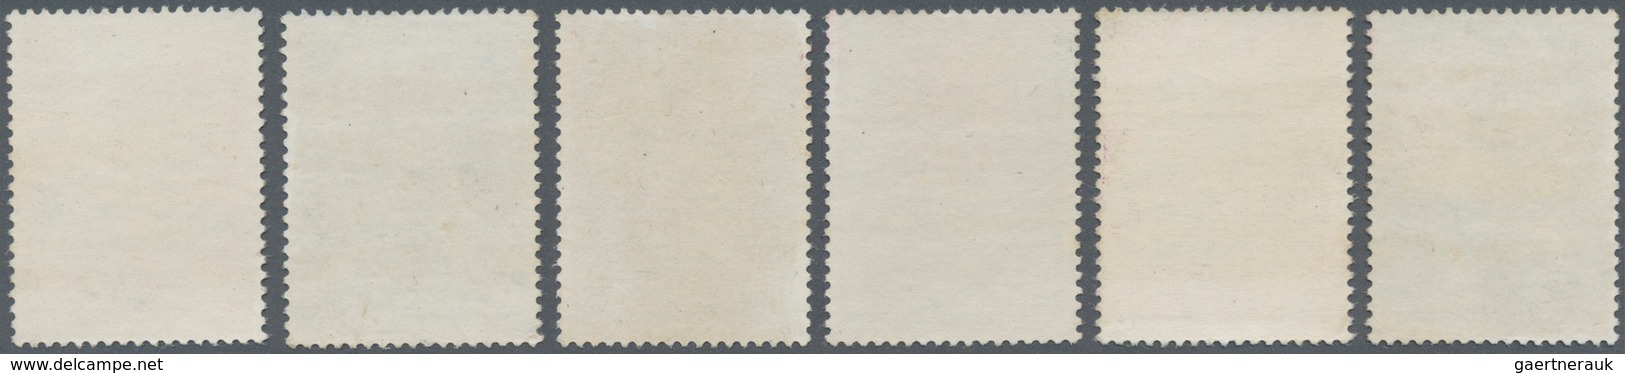 China - Volksrepublik: 1960, Chrysanthemum I-III, Cpl. Unused (regummed) Sets, One Single Stamp Is U - Briefe U. Dokumente